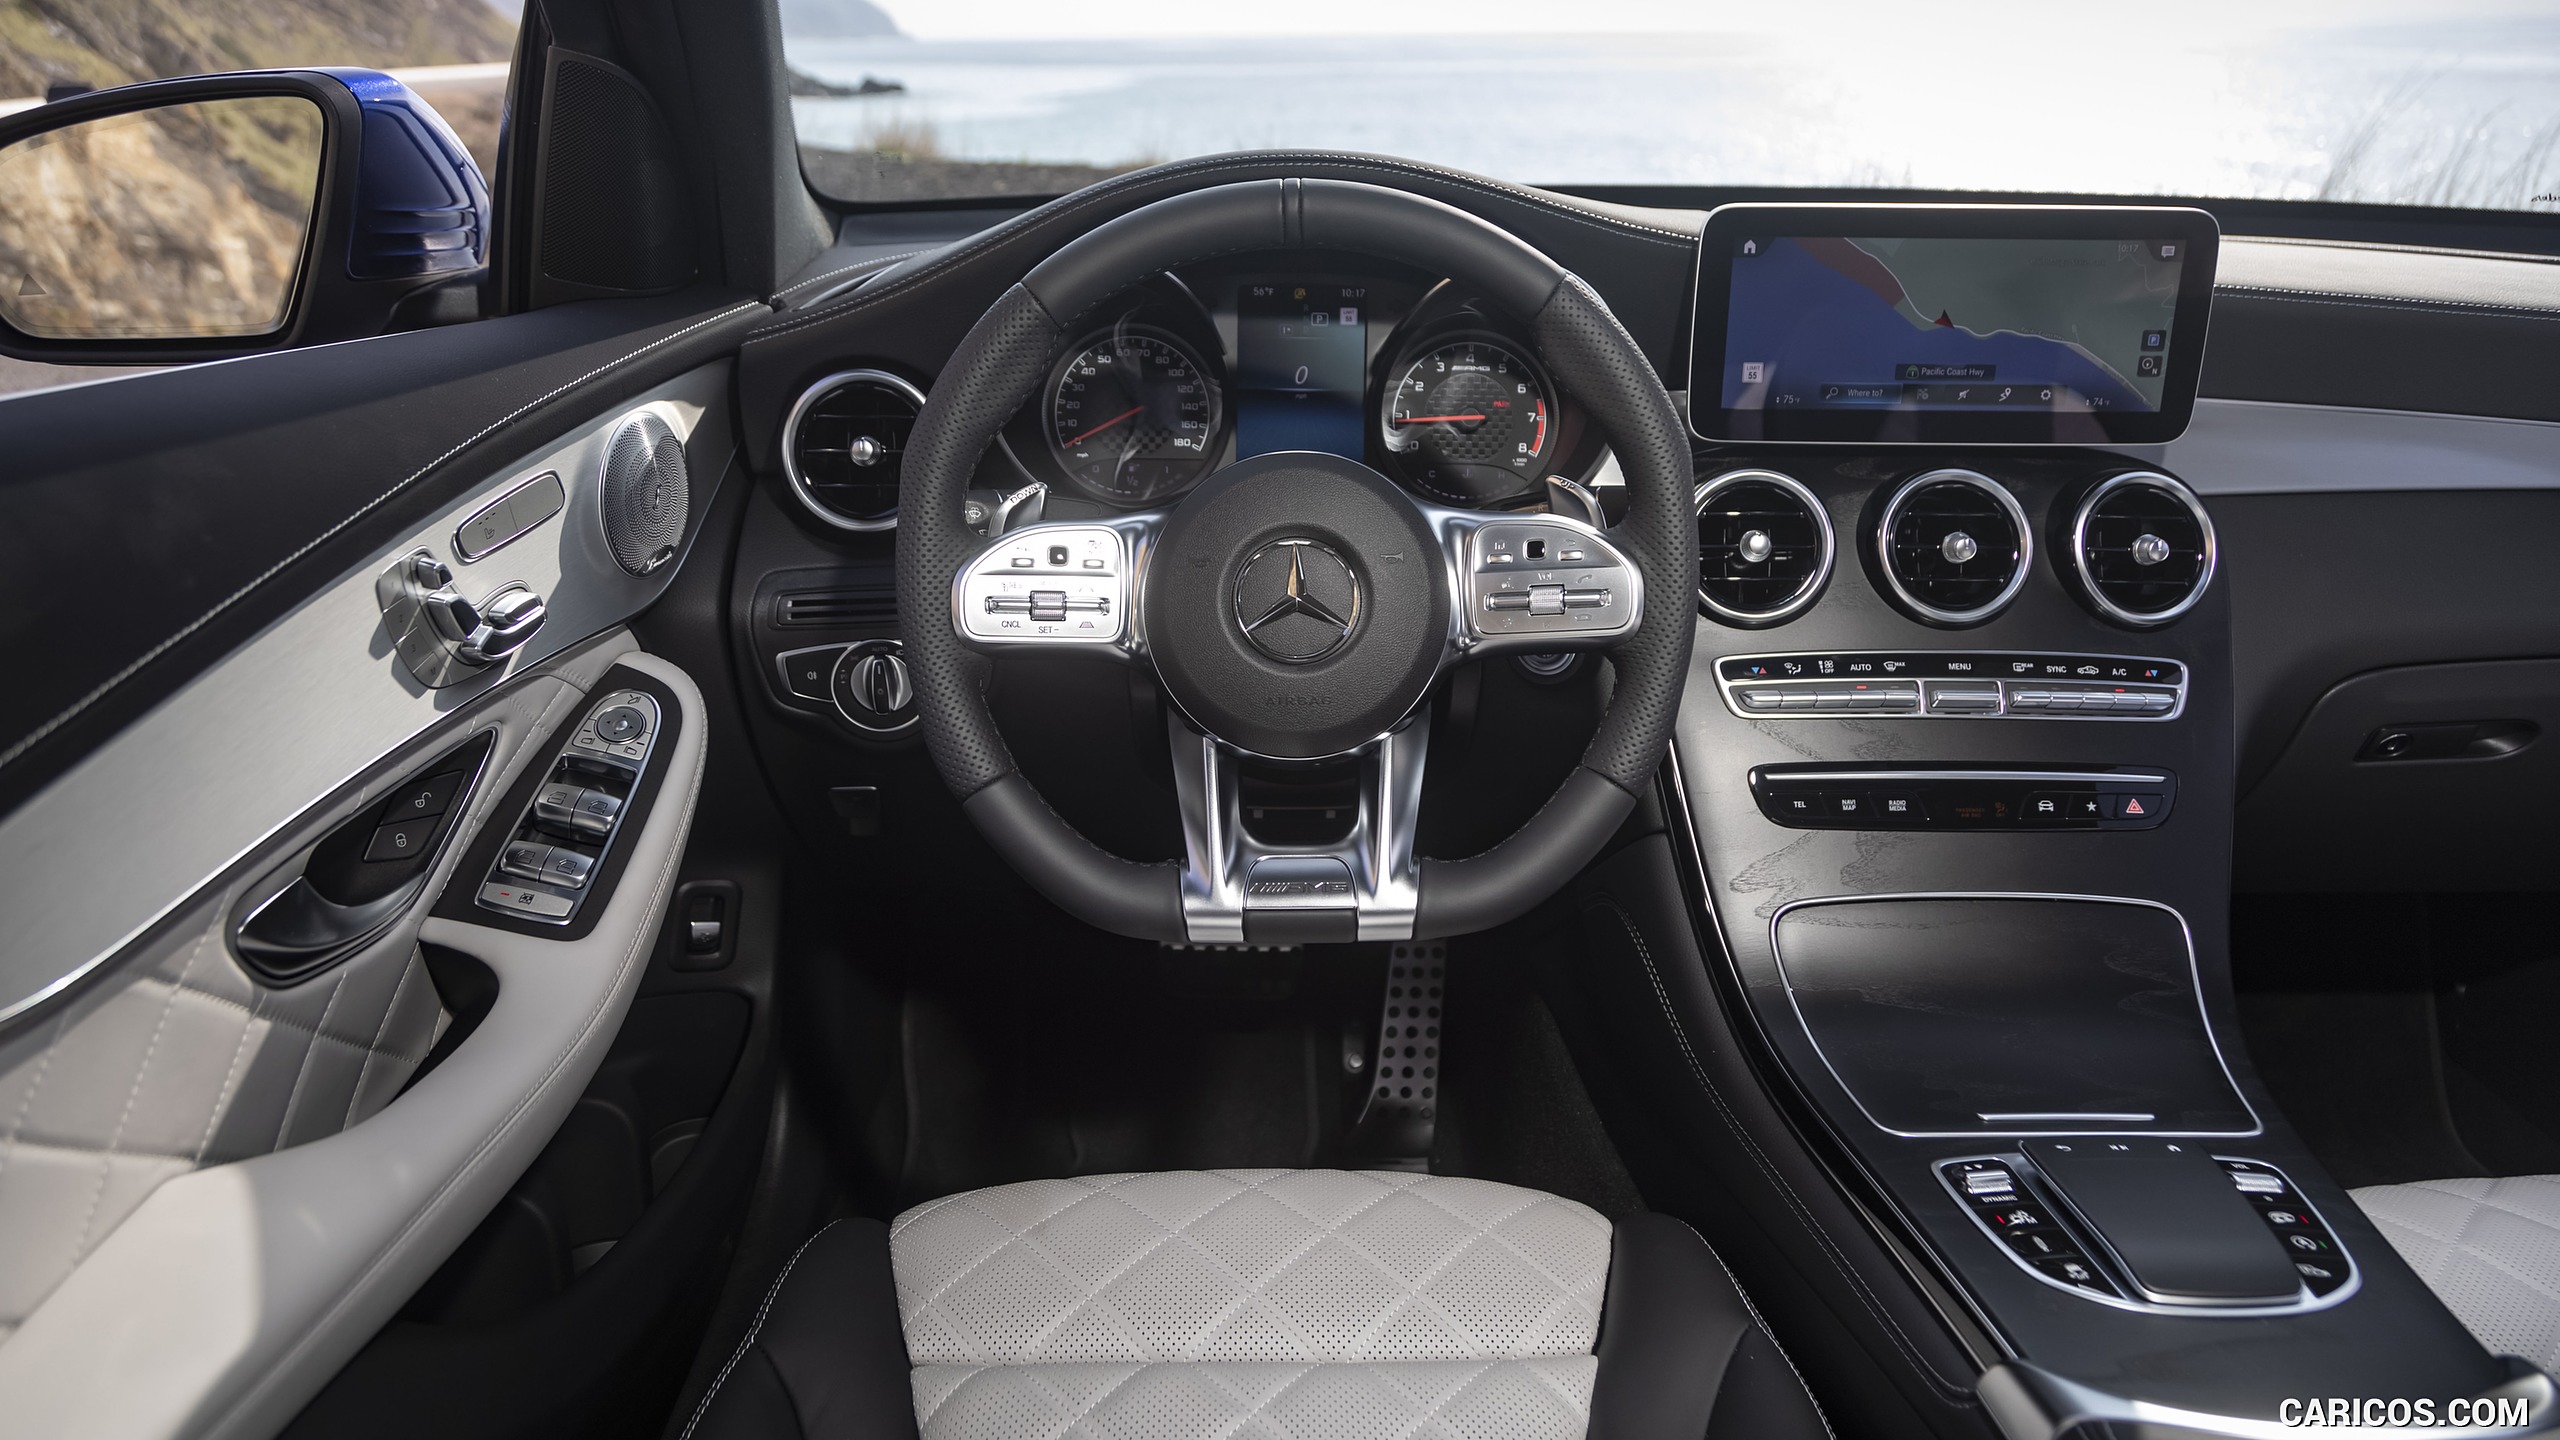 2020 Mercedes-AMG GLC 43 Coupe (US-Spec) - Interior, Cockpit, #161 of 173